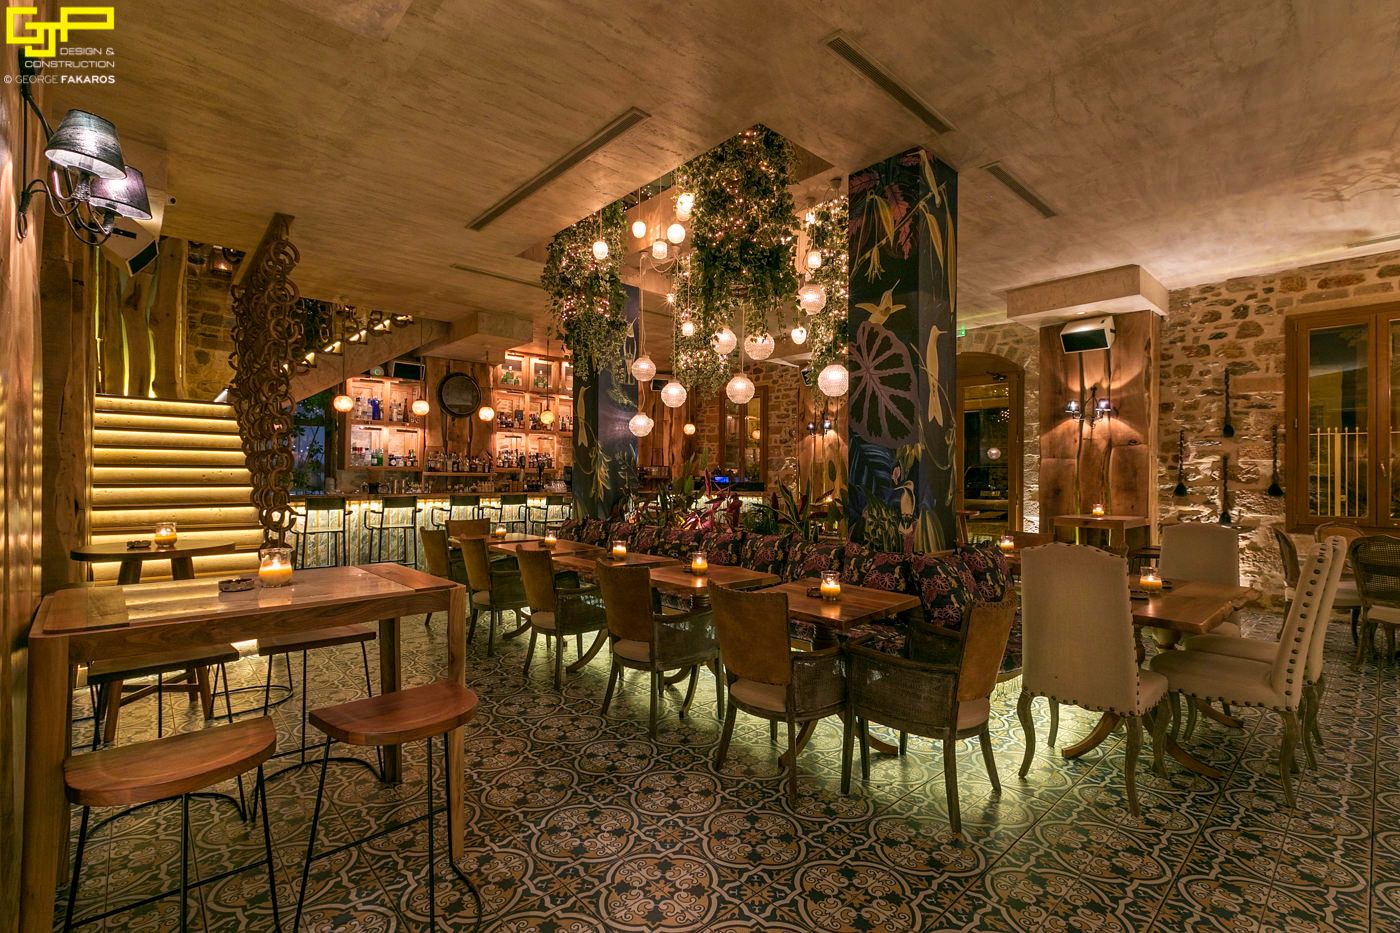 3 Café bars στην Αθήνα με πολύ ιδιαίτερο concept!